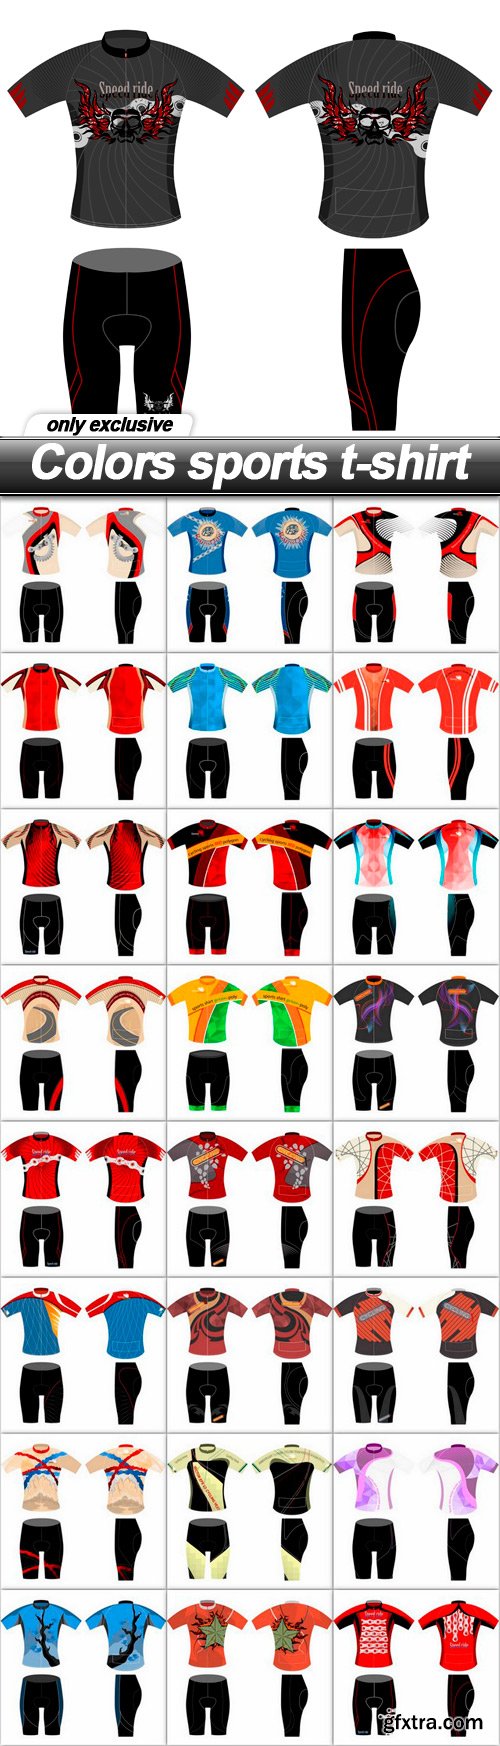 Colors sports t-shirt - 25 EPS